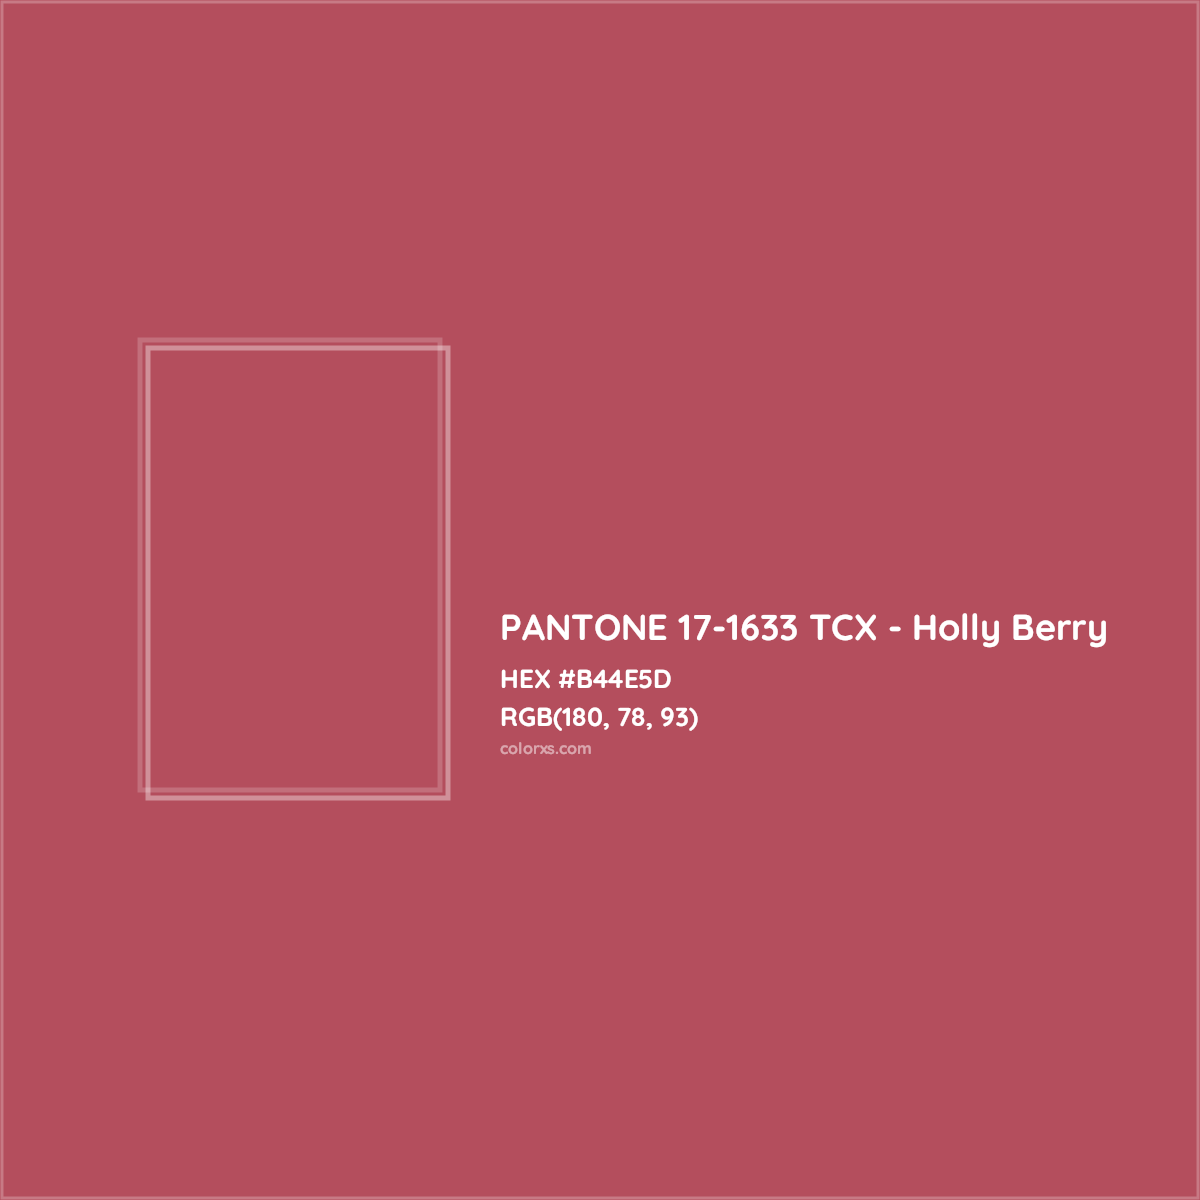 HEX #B44E5D PANTONE 17-1633 TCX - Holly Berry CMS Pantone TCX - Color Code